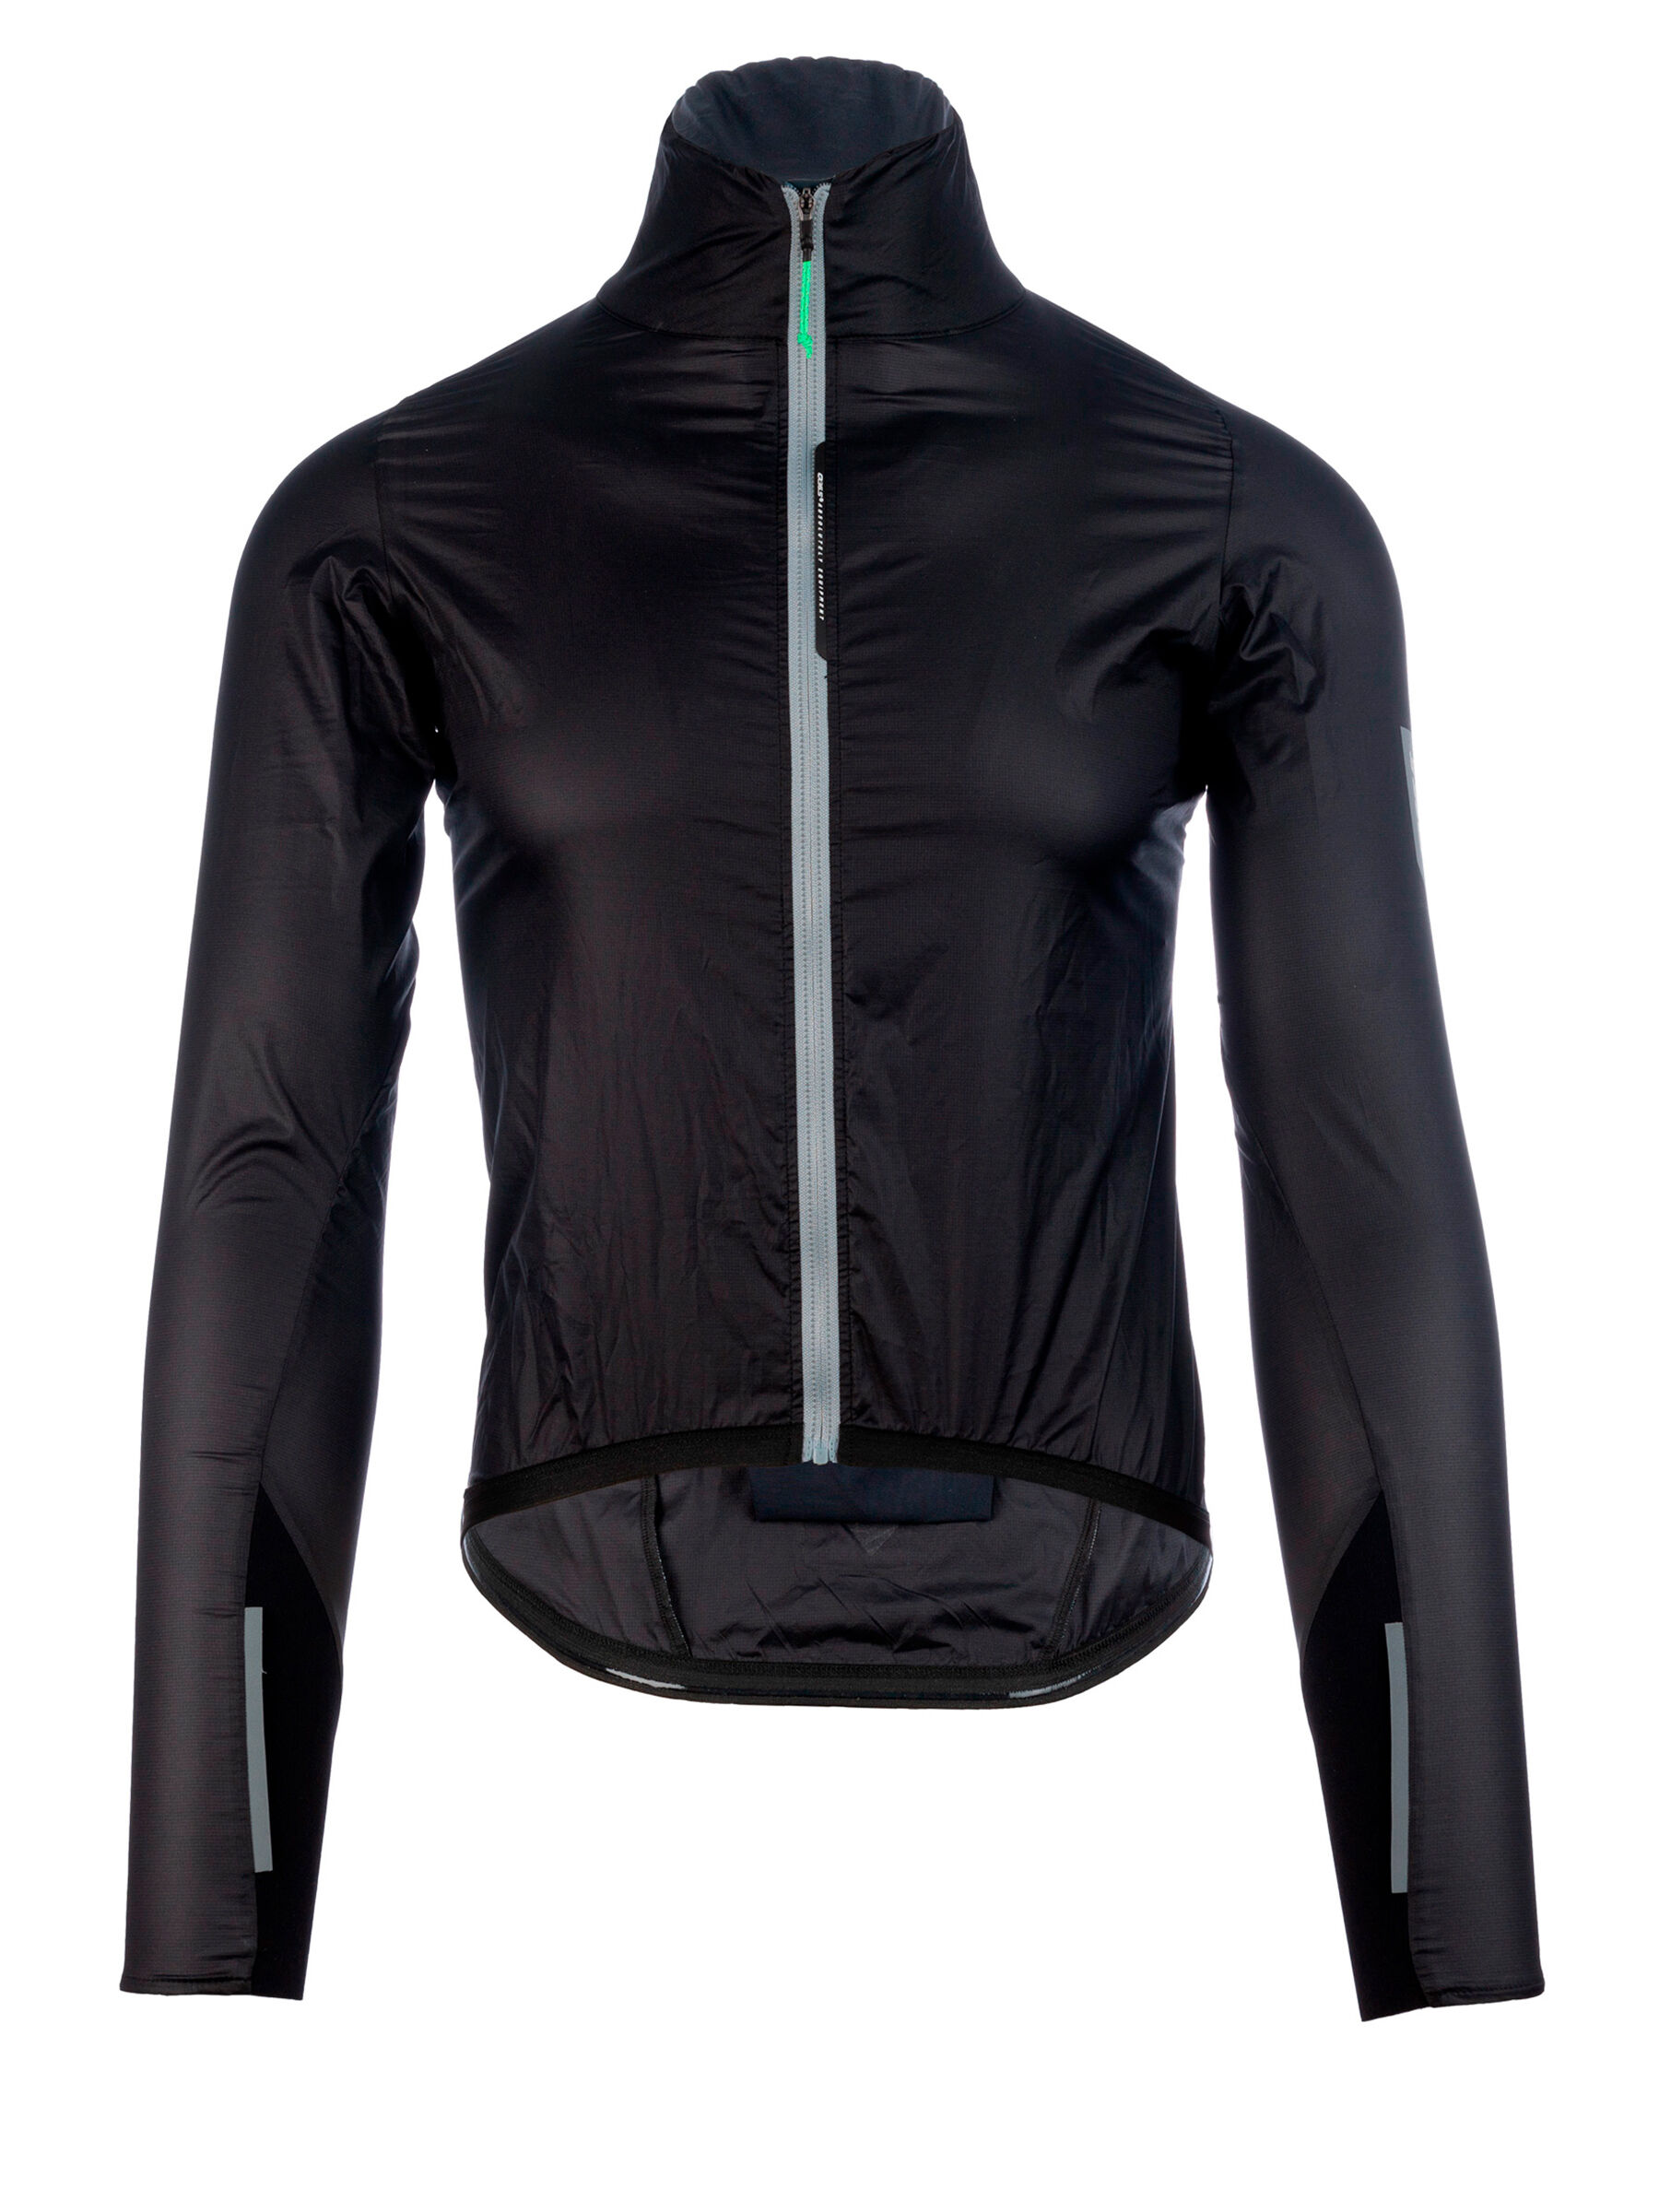 Q36.5 Air Shell Jacket - Cycling windproof jacket - Men's